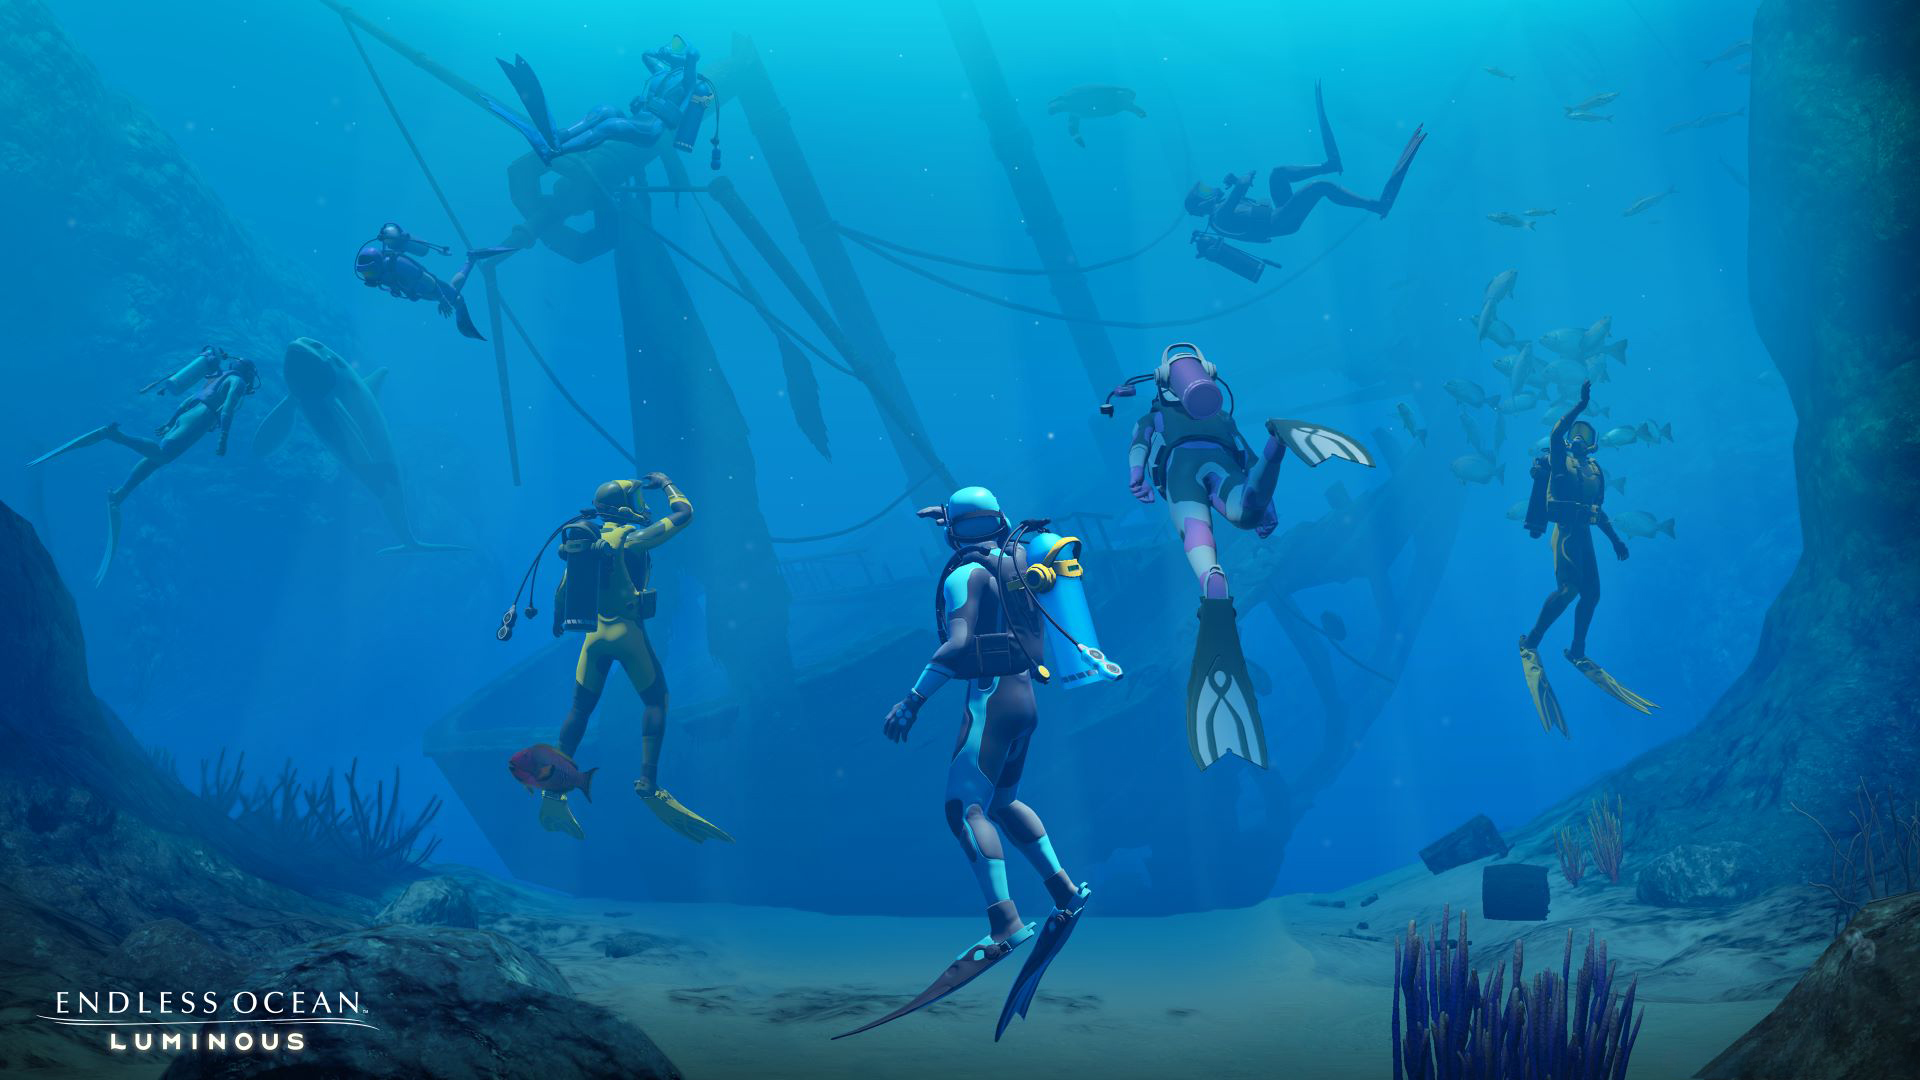 General 1920x1080 Endless Ocean Endless Ocean Luminous video game art scuba scuba diving manta rays fish coral